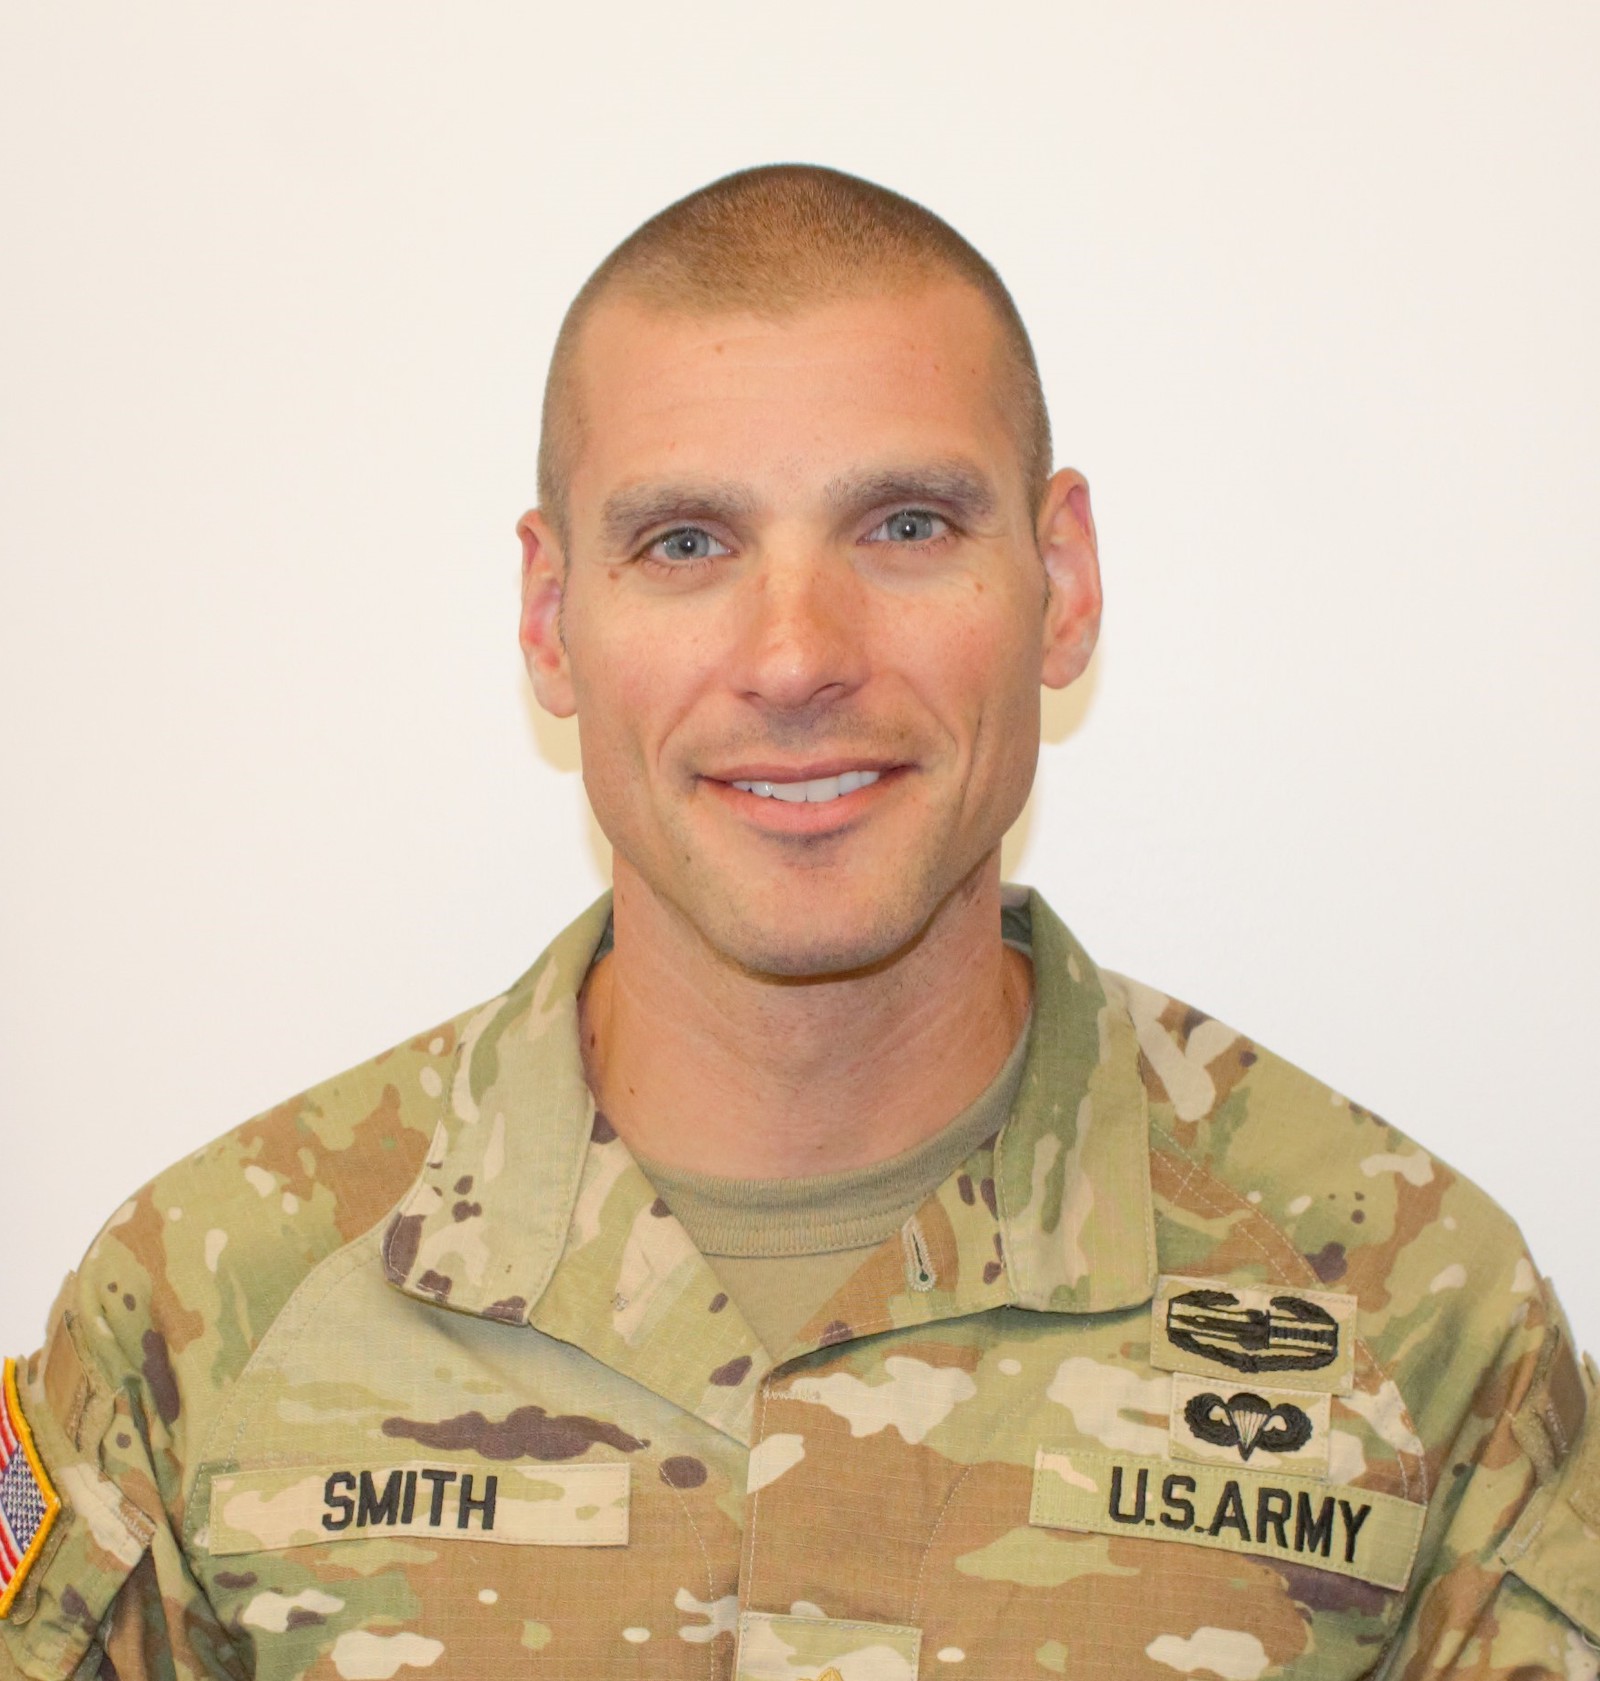 Major Andrew Smith